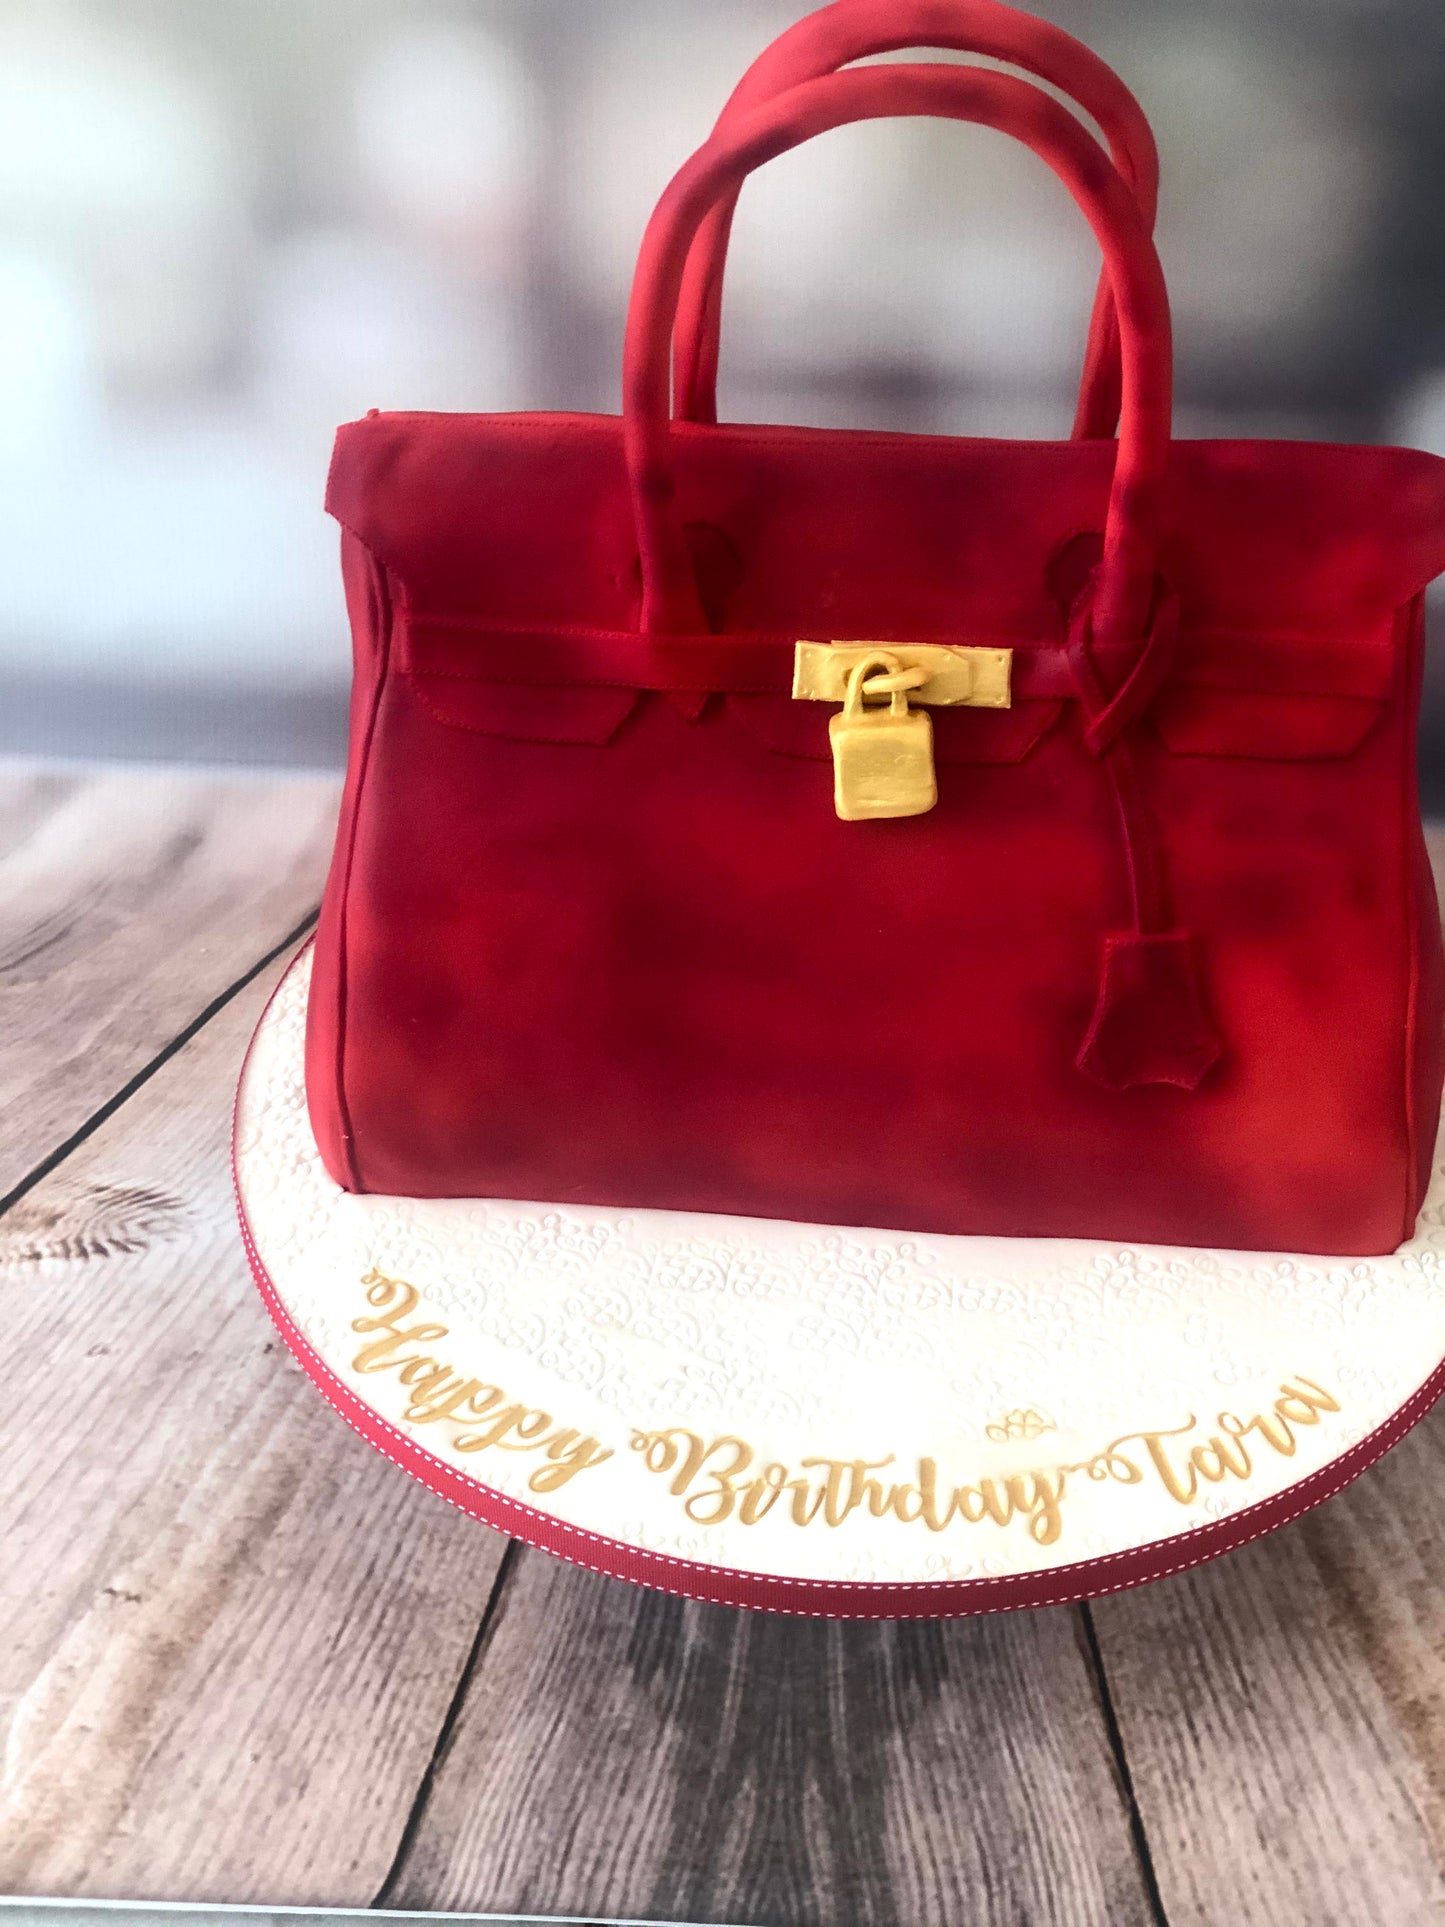 Red Hermes bag cake